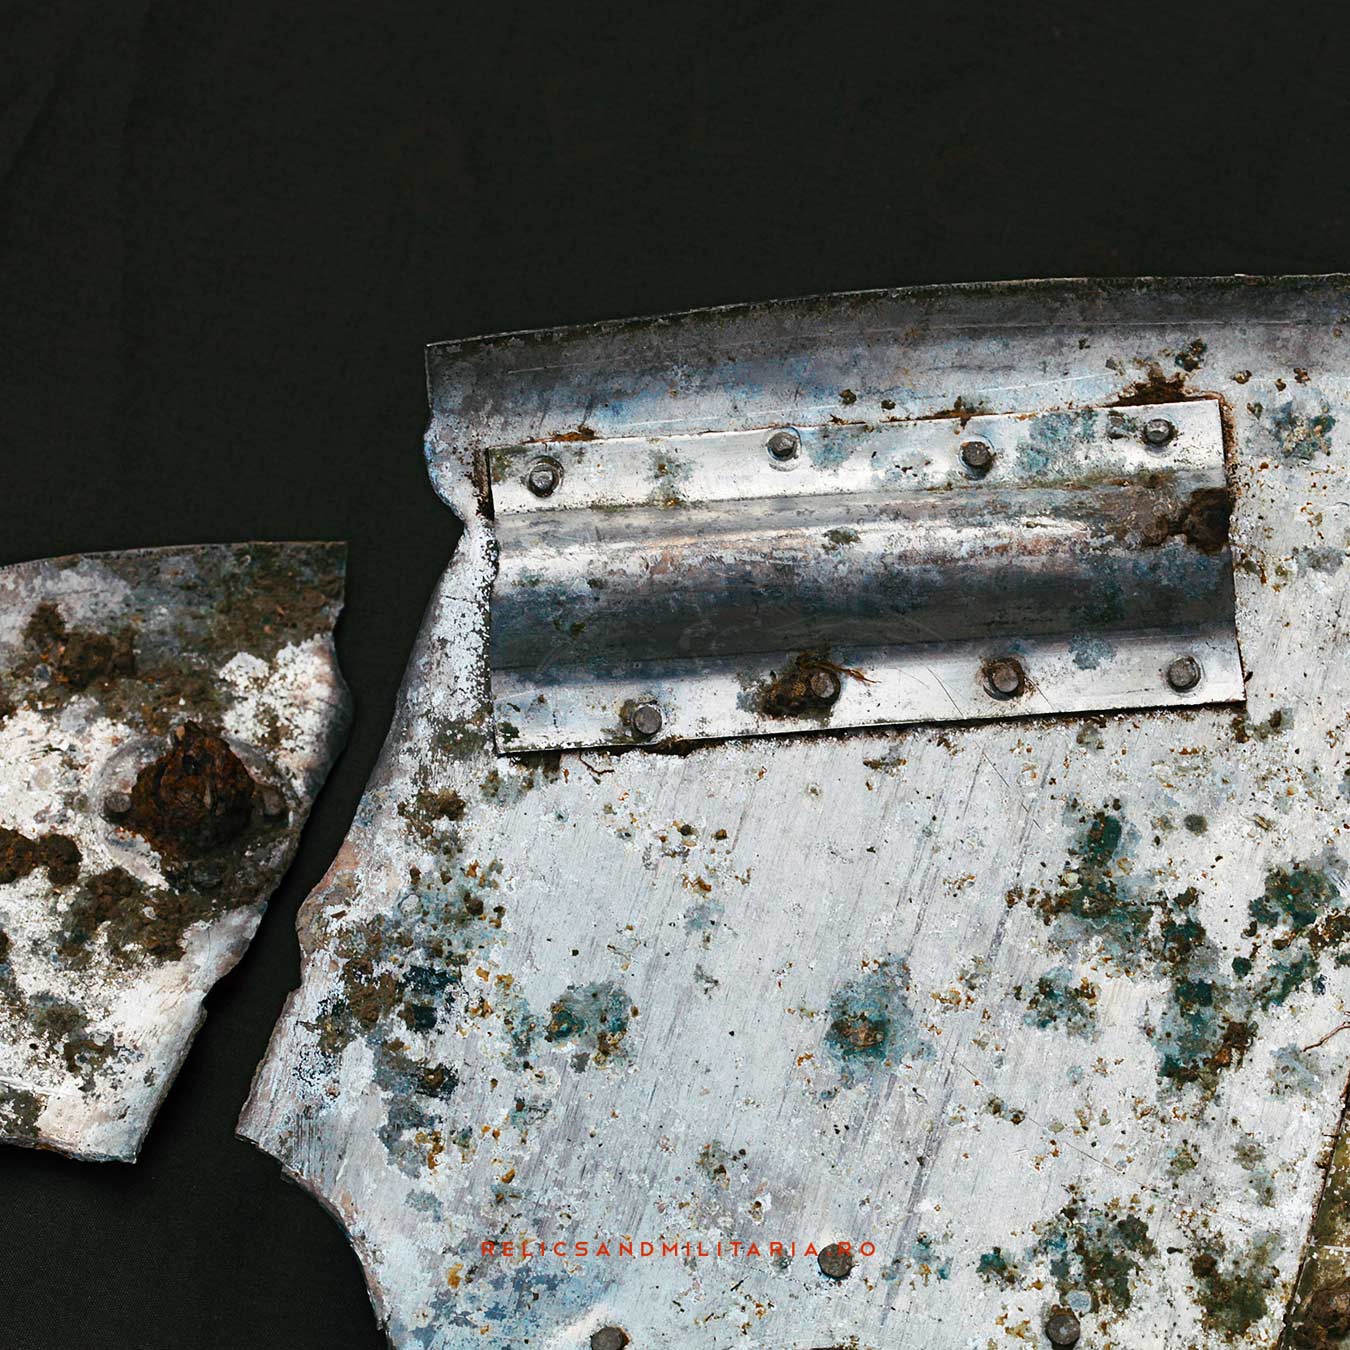  Ilyushin Il-2 Shturmovik relics found in Romania fallen in 1944 during Targu Frumos battle